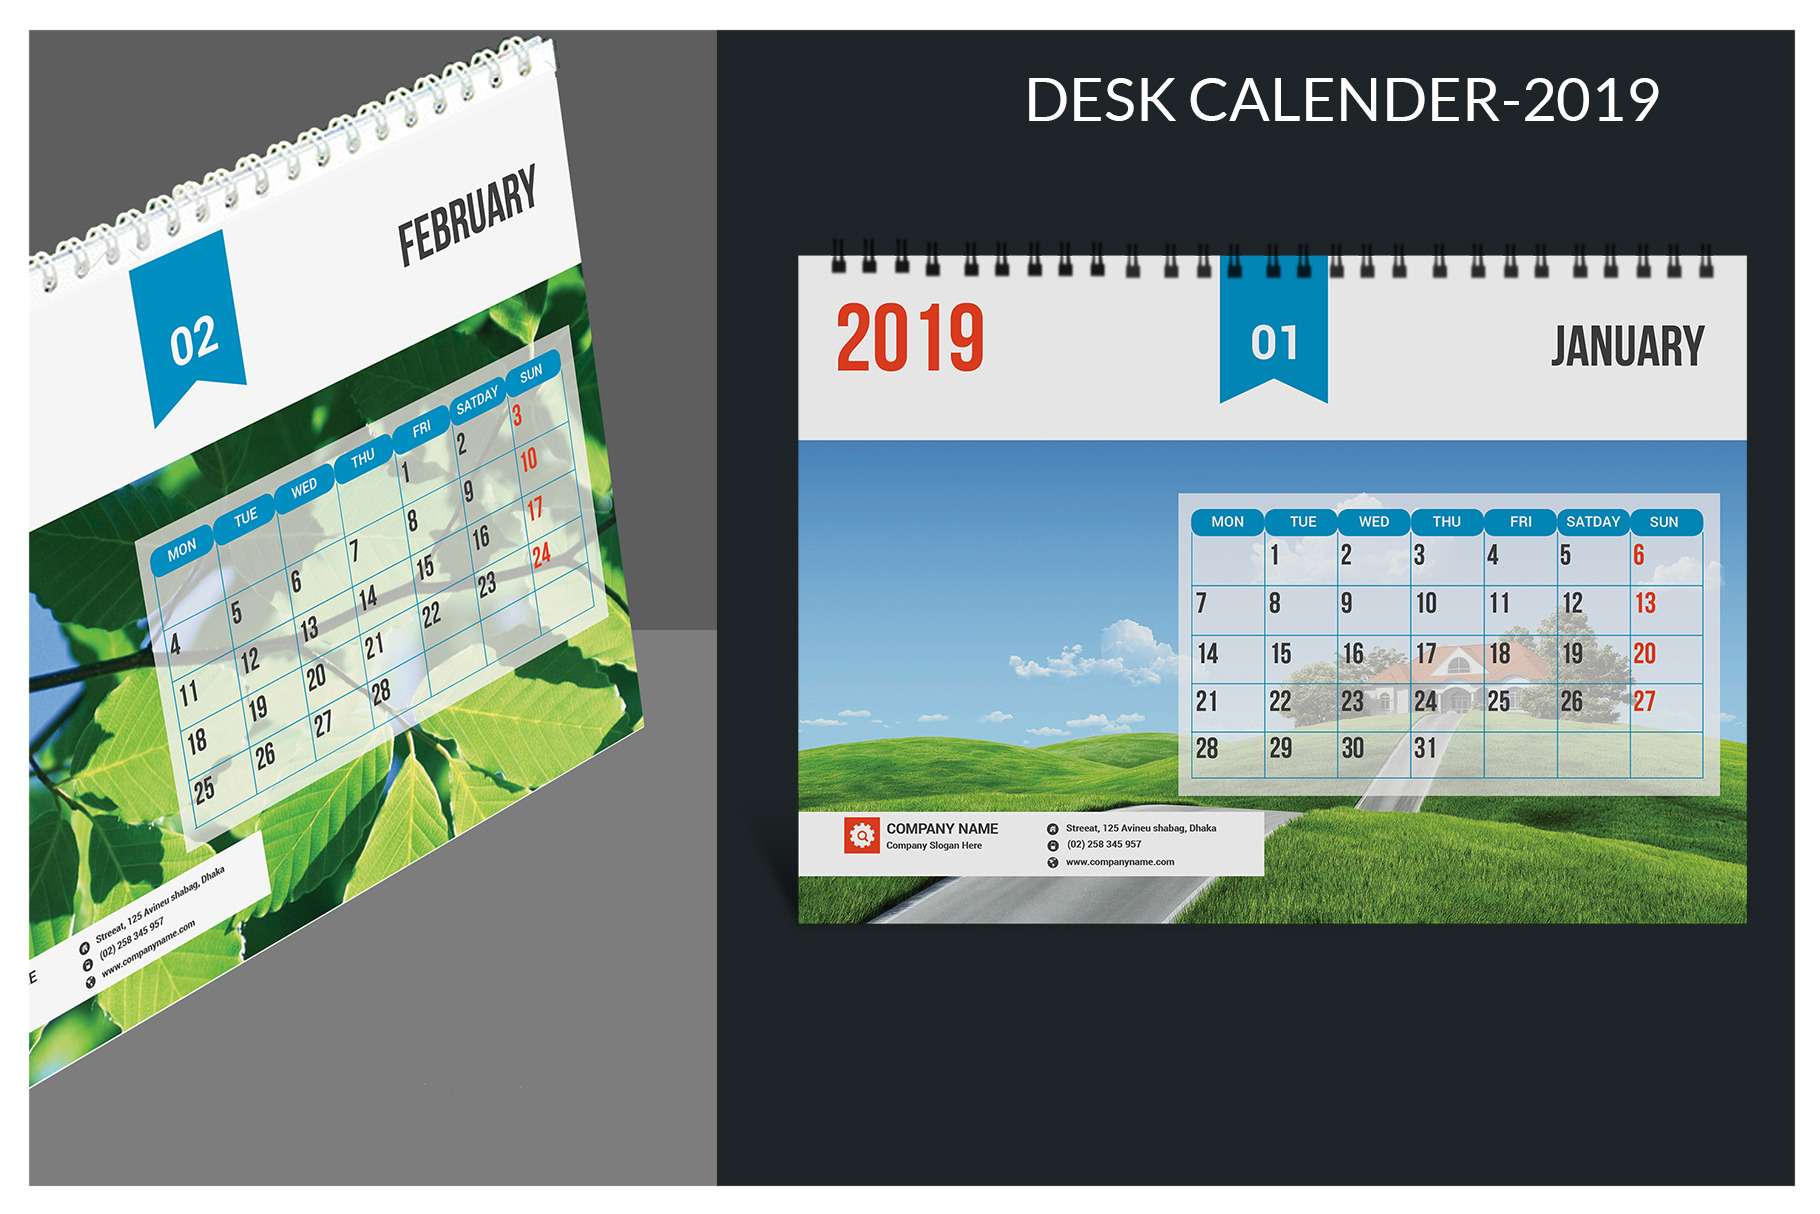 Desk Calendar-2019 - Stationery - 3